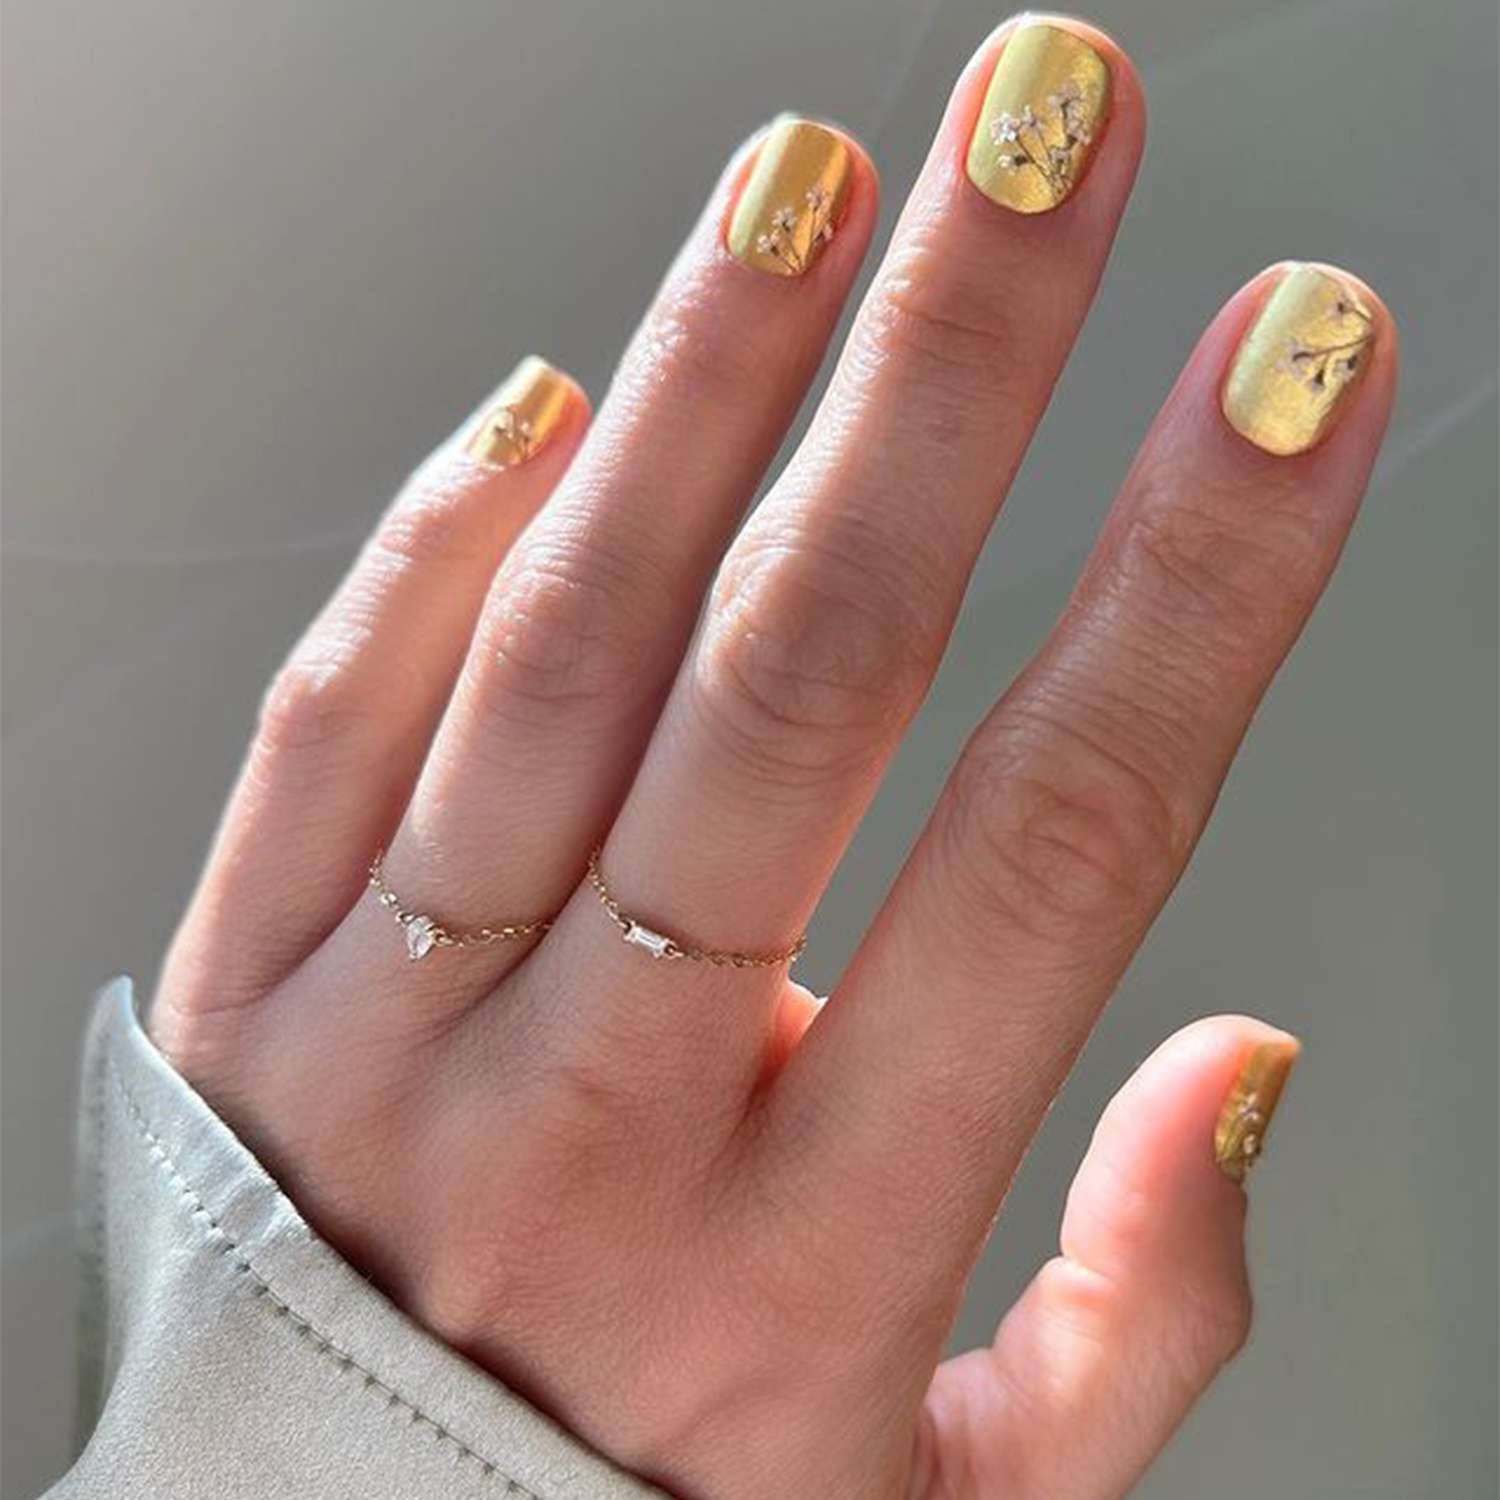 Manicure de flores douradas vintage